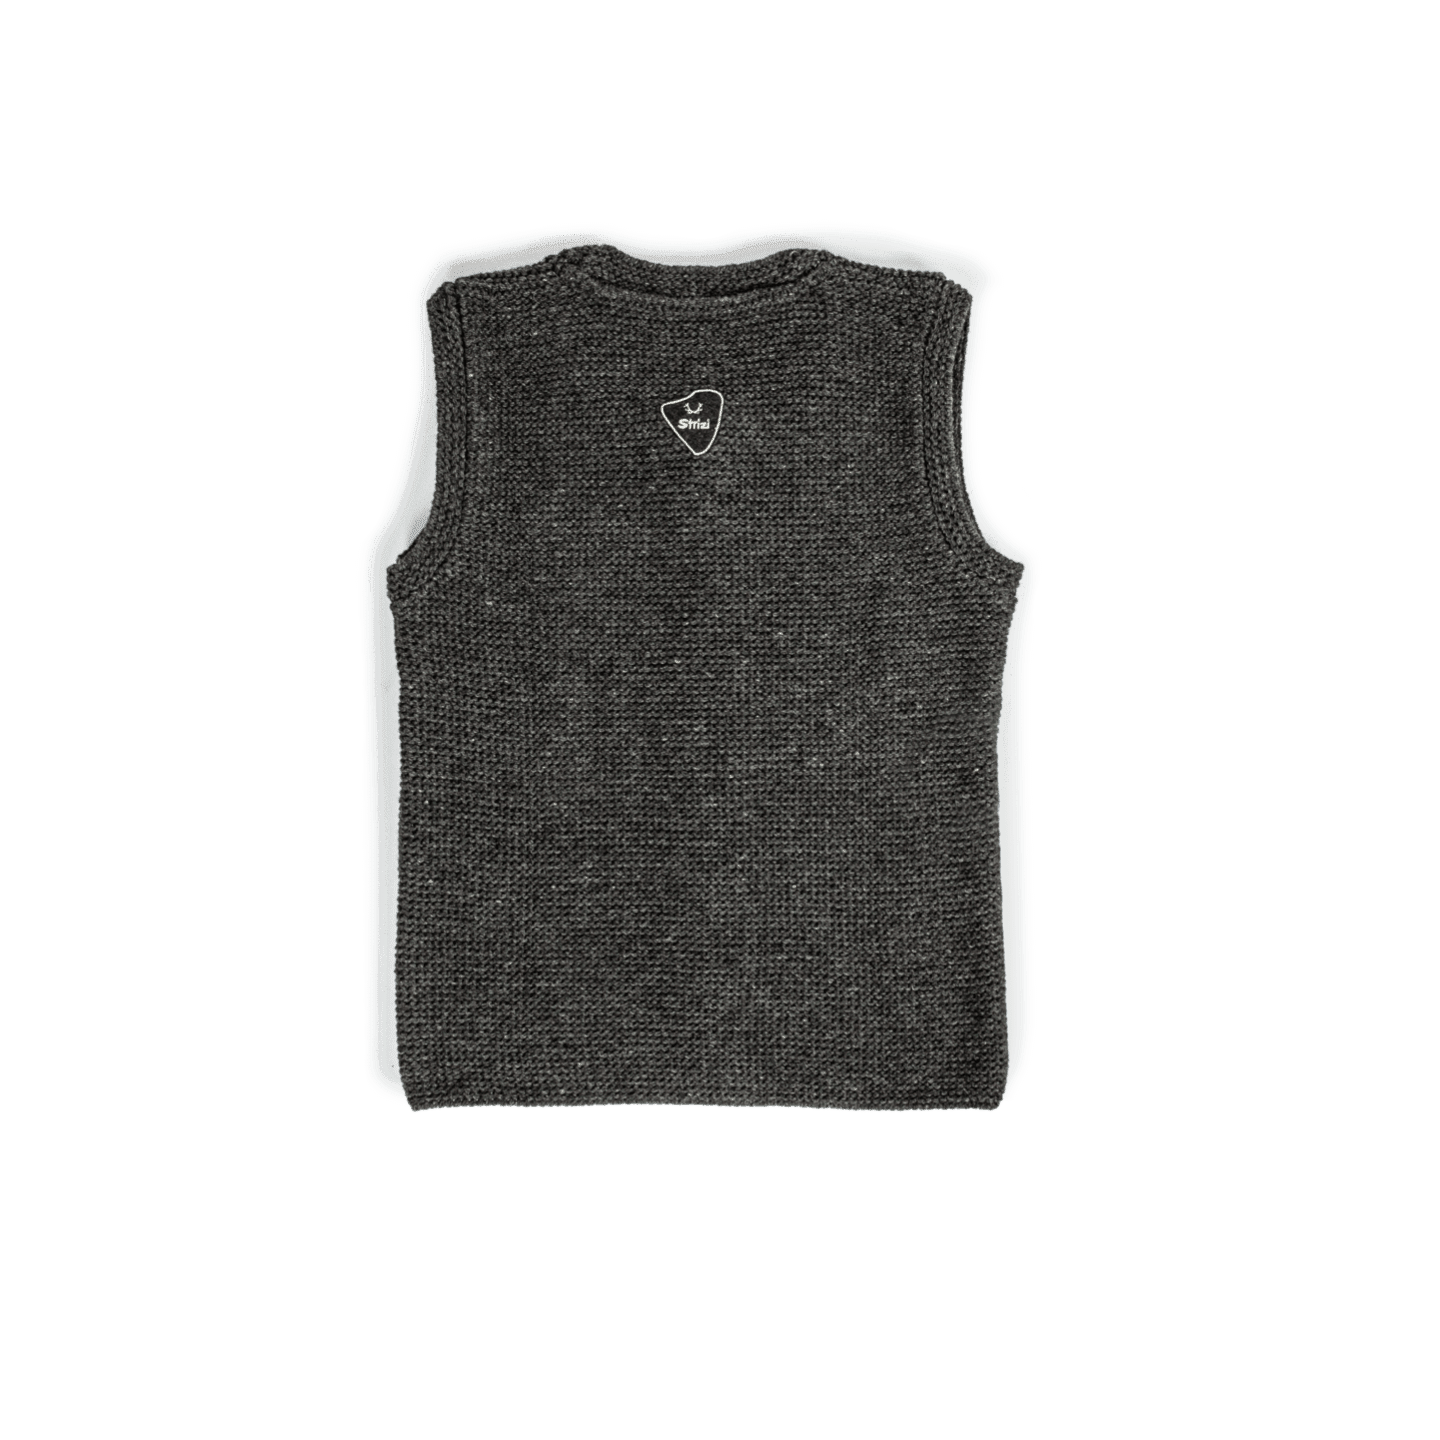 Strizi Herren Strickweste grau 2 - Strizi Knitted vest gray